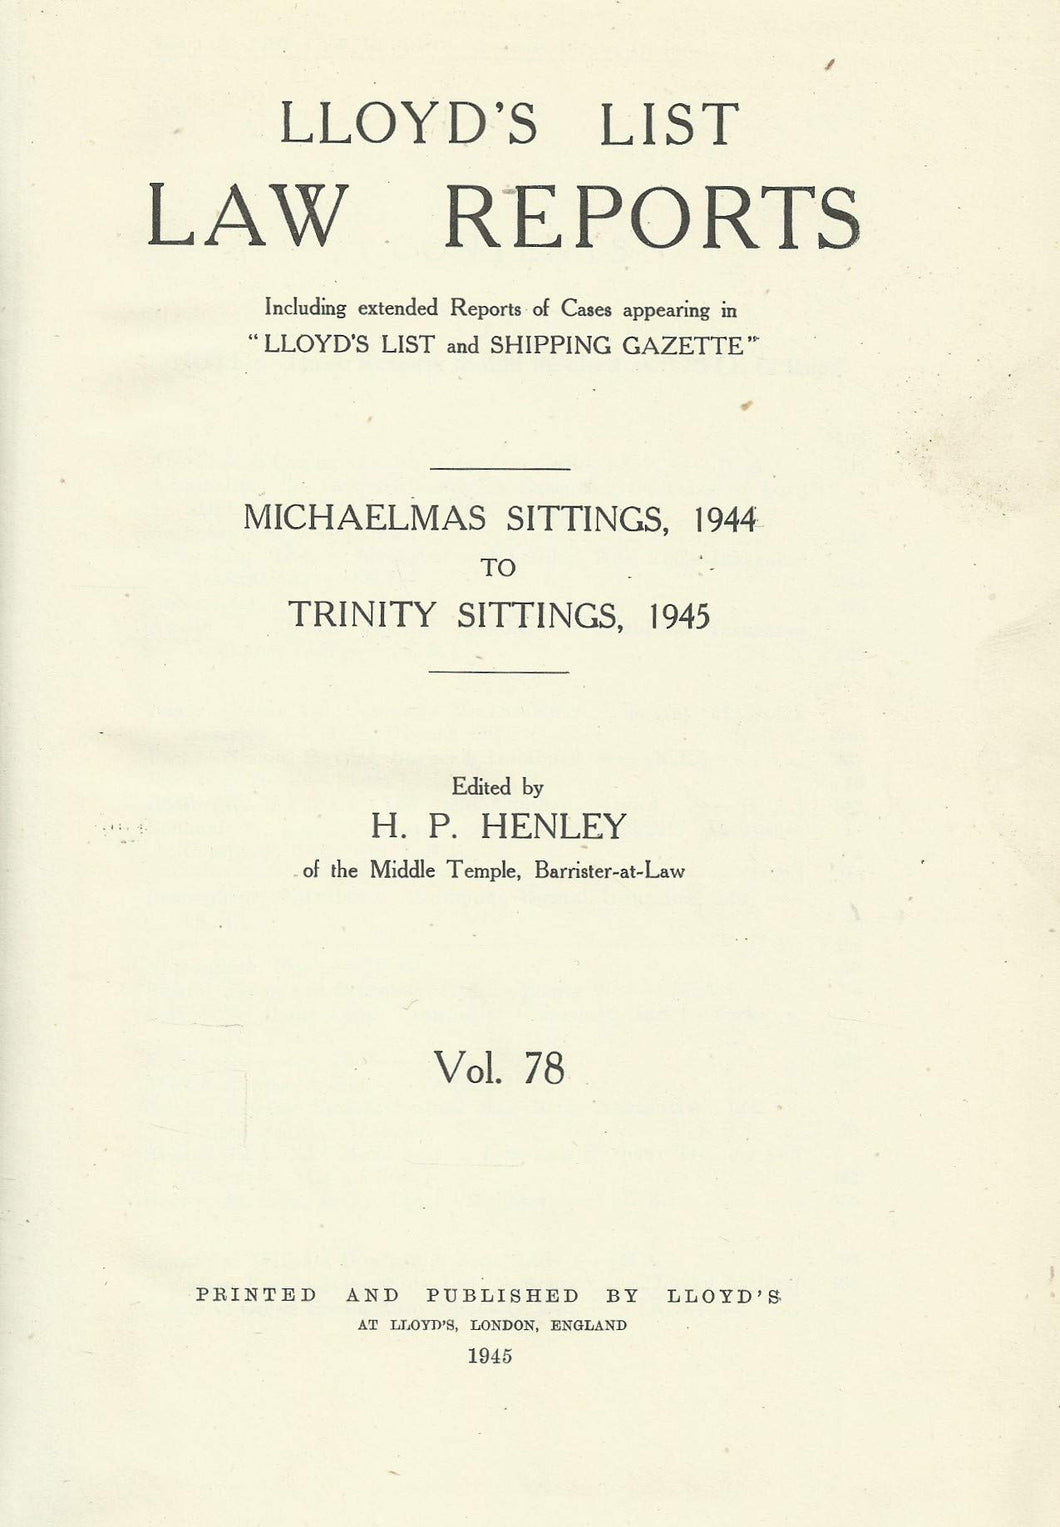 Lloyd's List Law Reports - Volume 78, Michaelmas Sittings, 1944 to Trinity Sittings, 1945